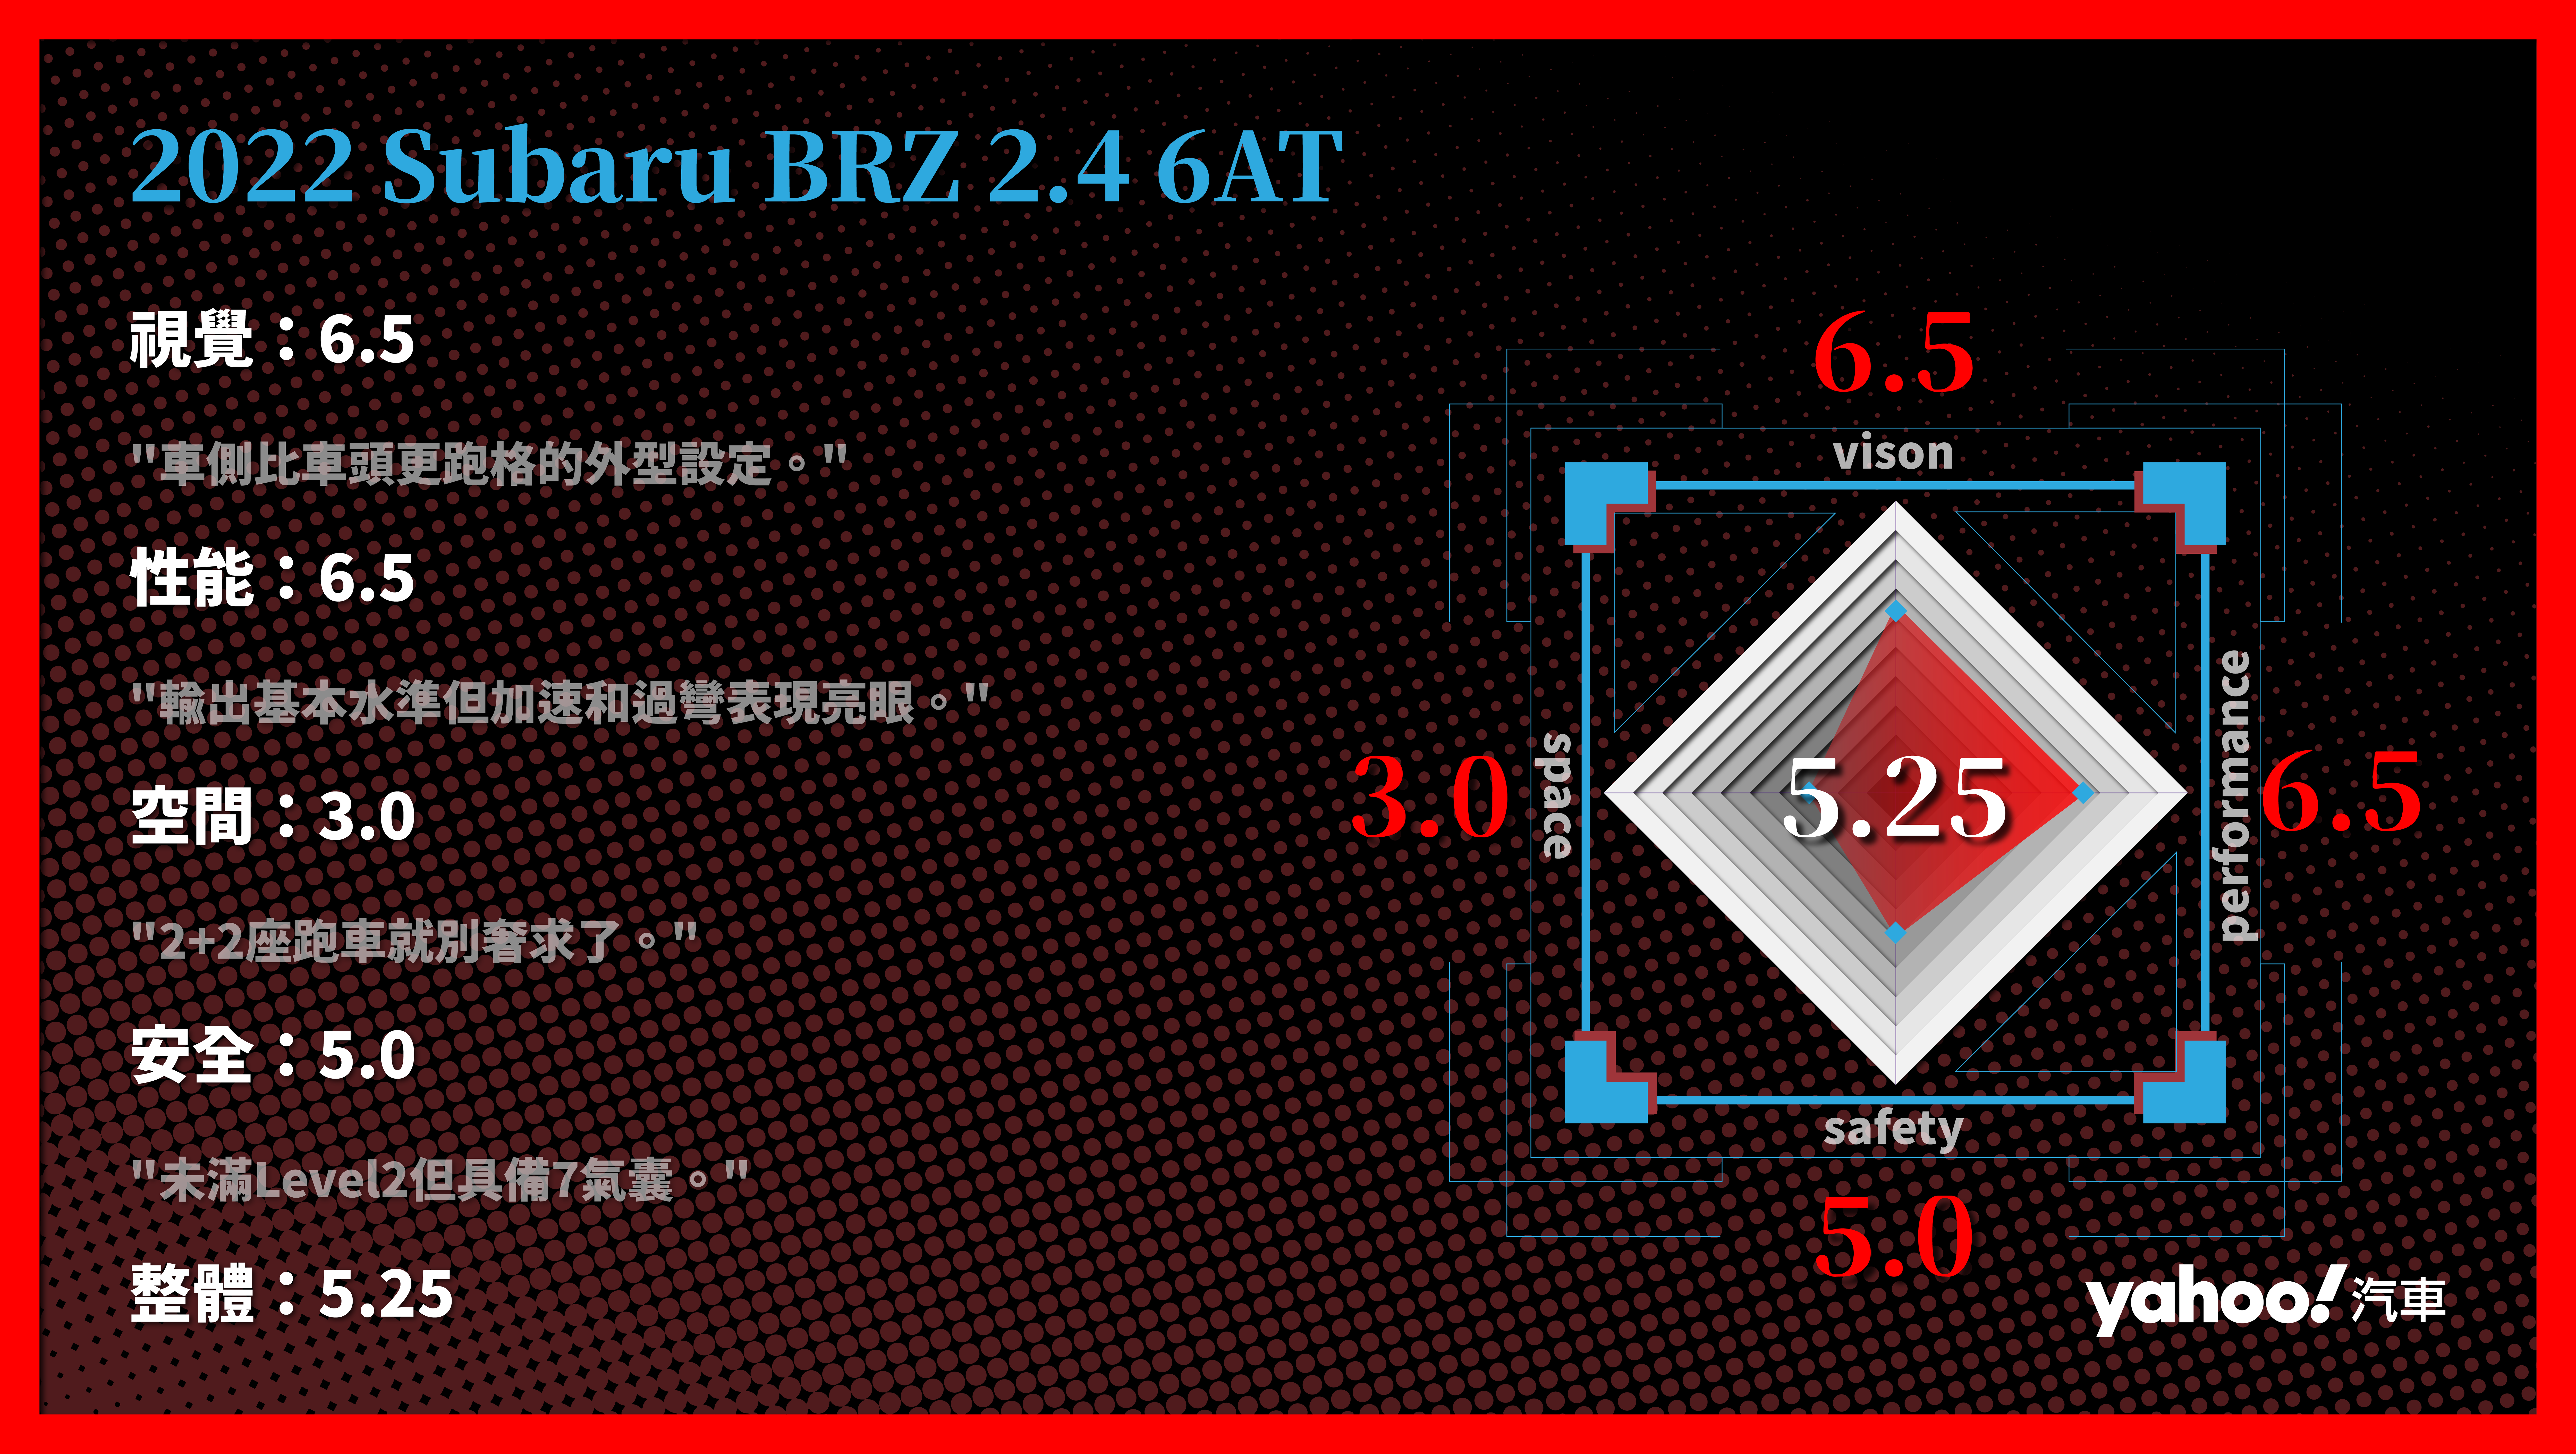 2022 Subaru BRZ 2.4 6AT 的分項評比。